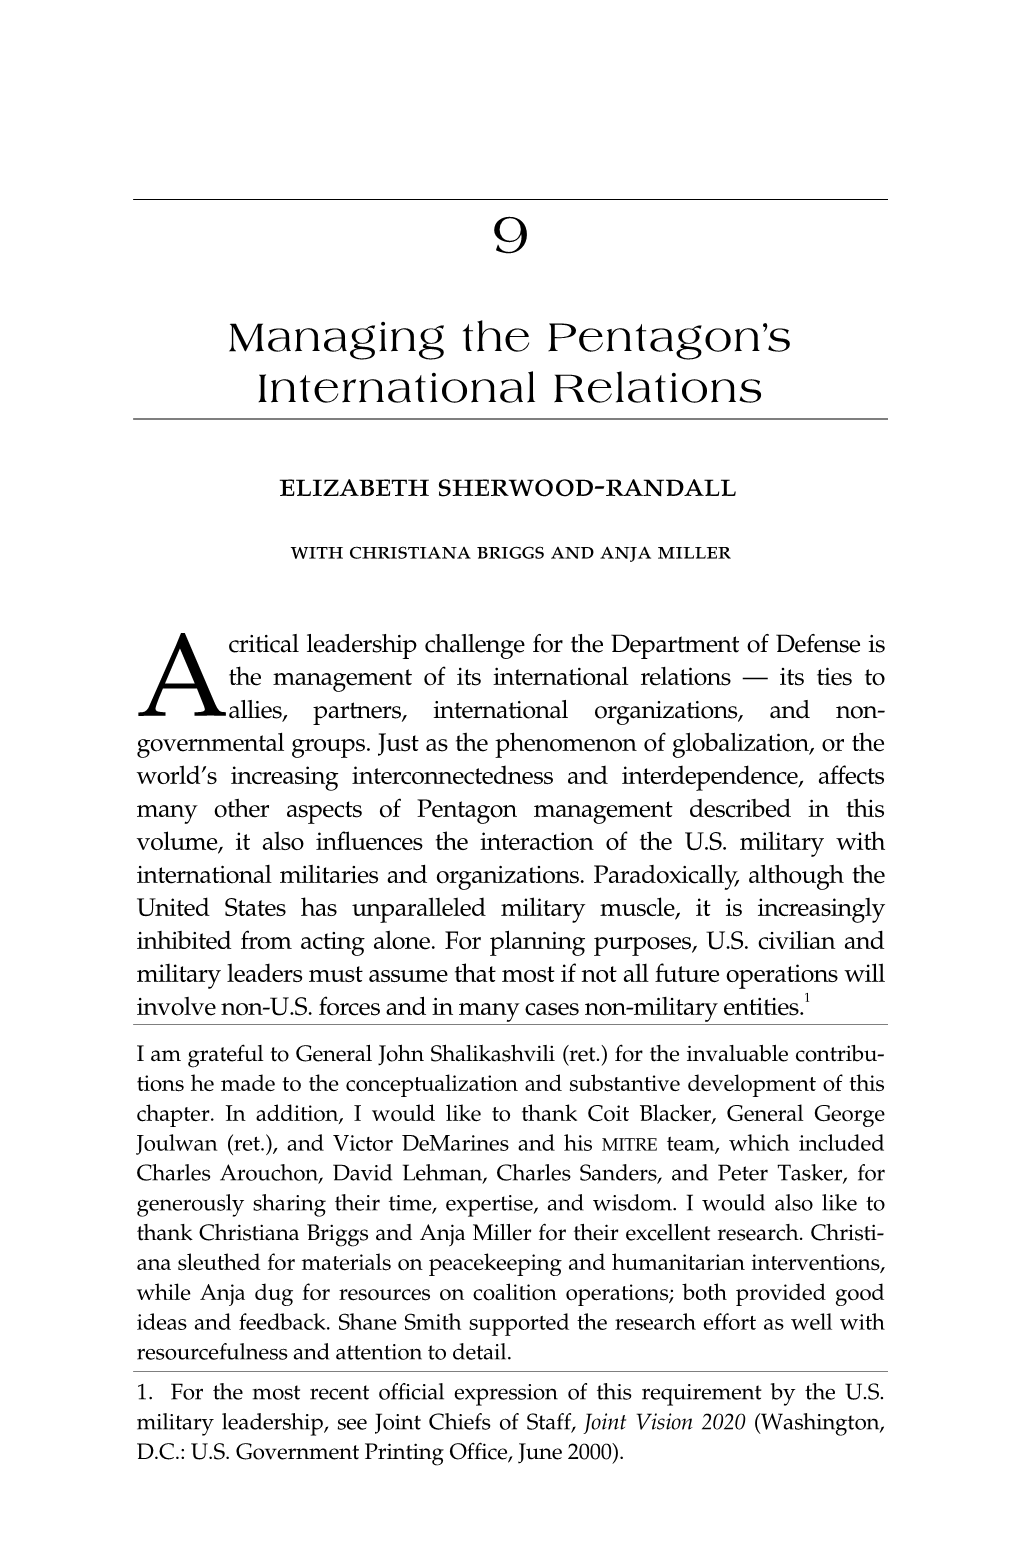 Managing the Pentagon's International Relations